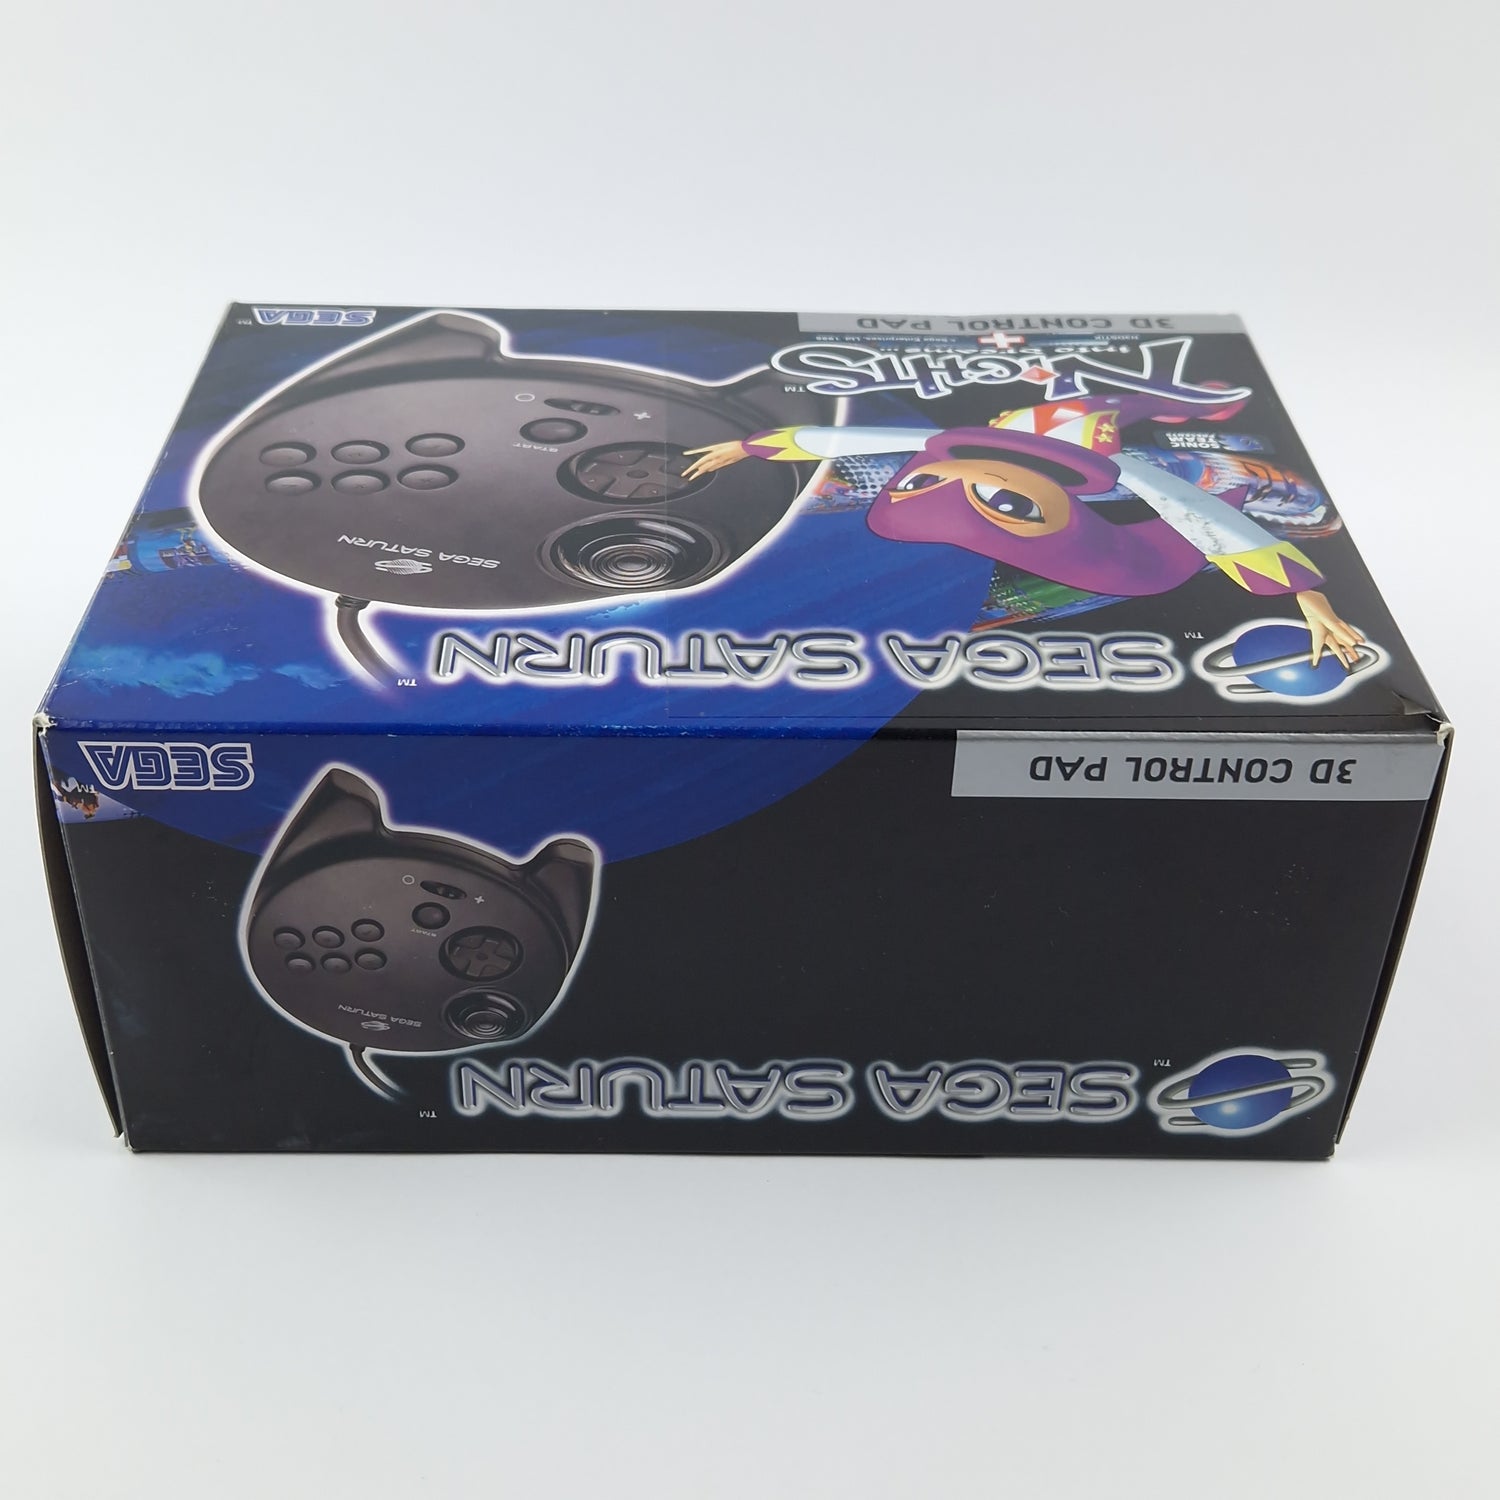 Sega Saturn Accessories: Nights into Dreams + 3D Control PAD Controller - OVP PAL